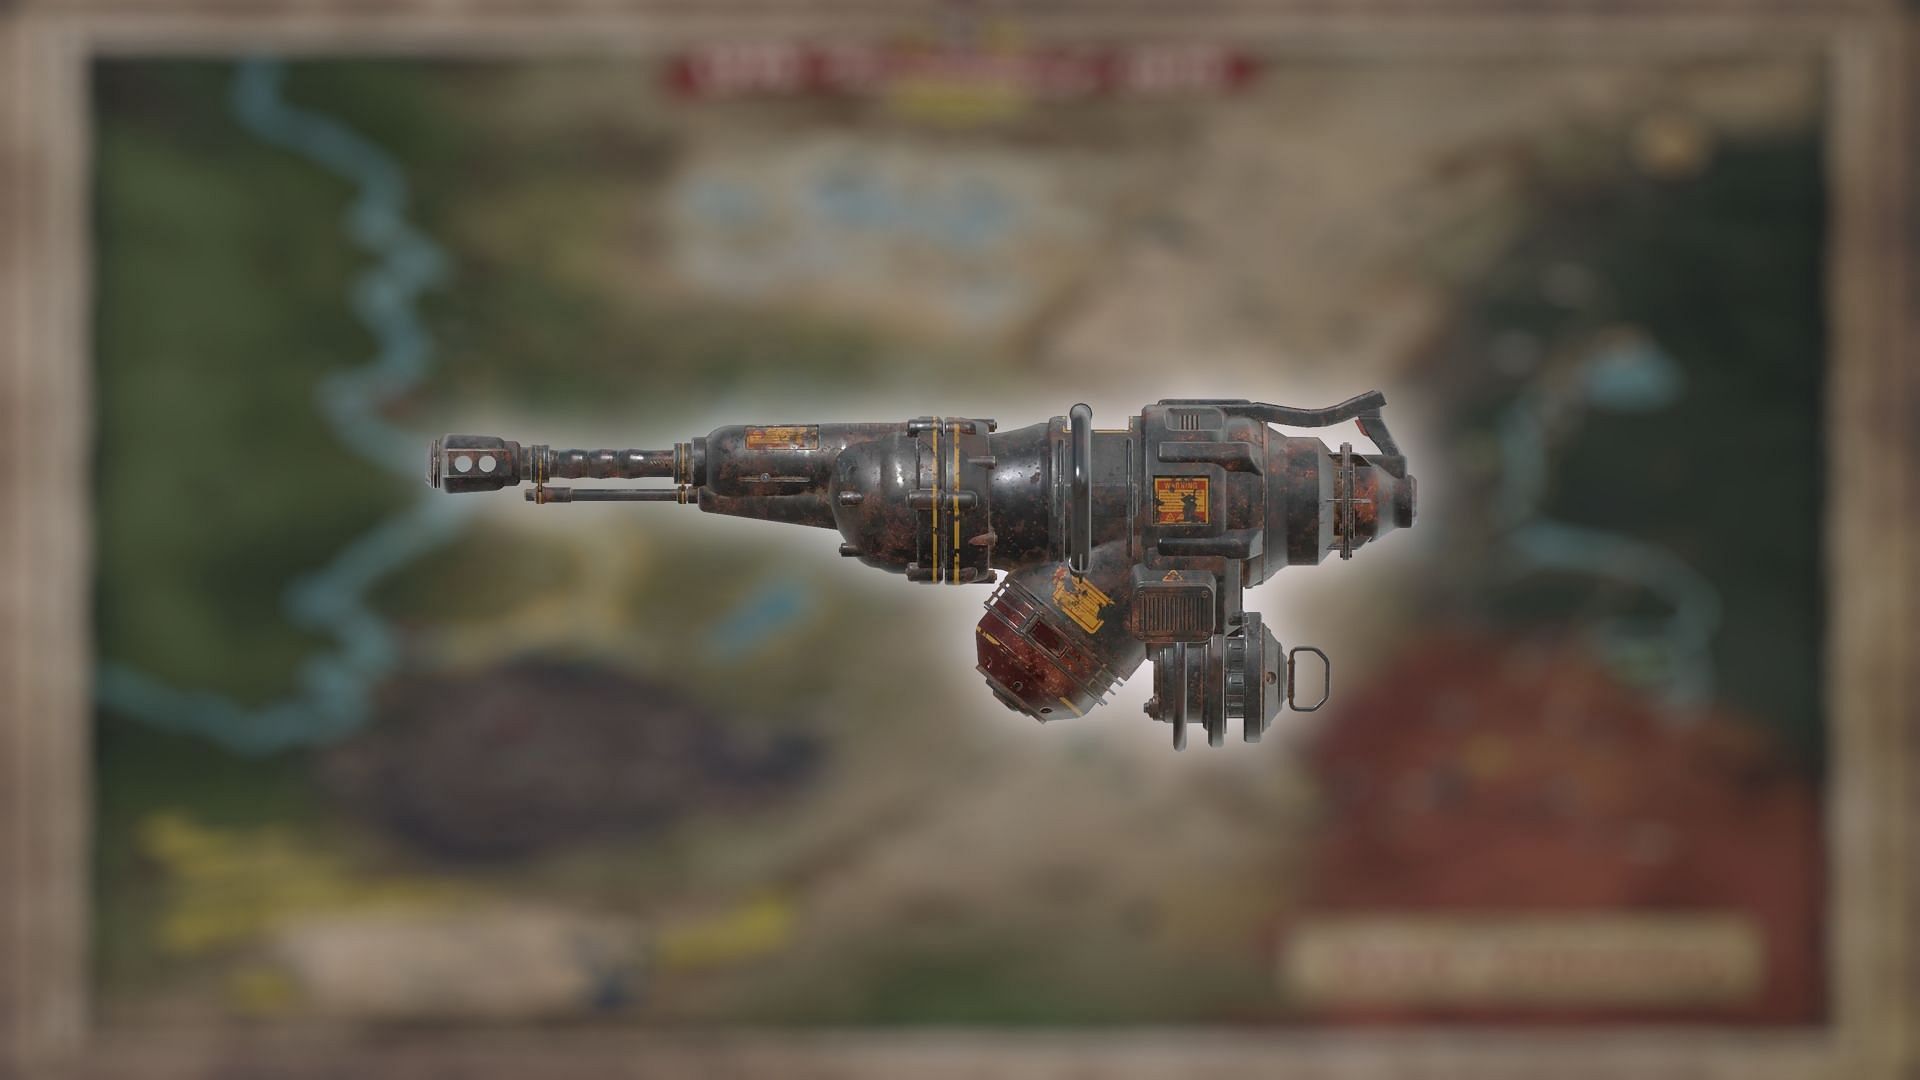 The Gauss Minigun in Fallout 76 (Image via Bethesda Game Studios)